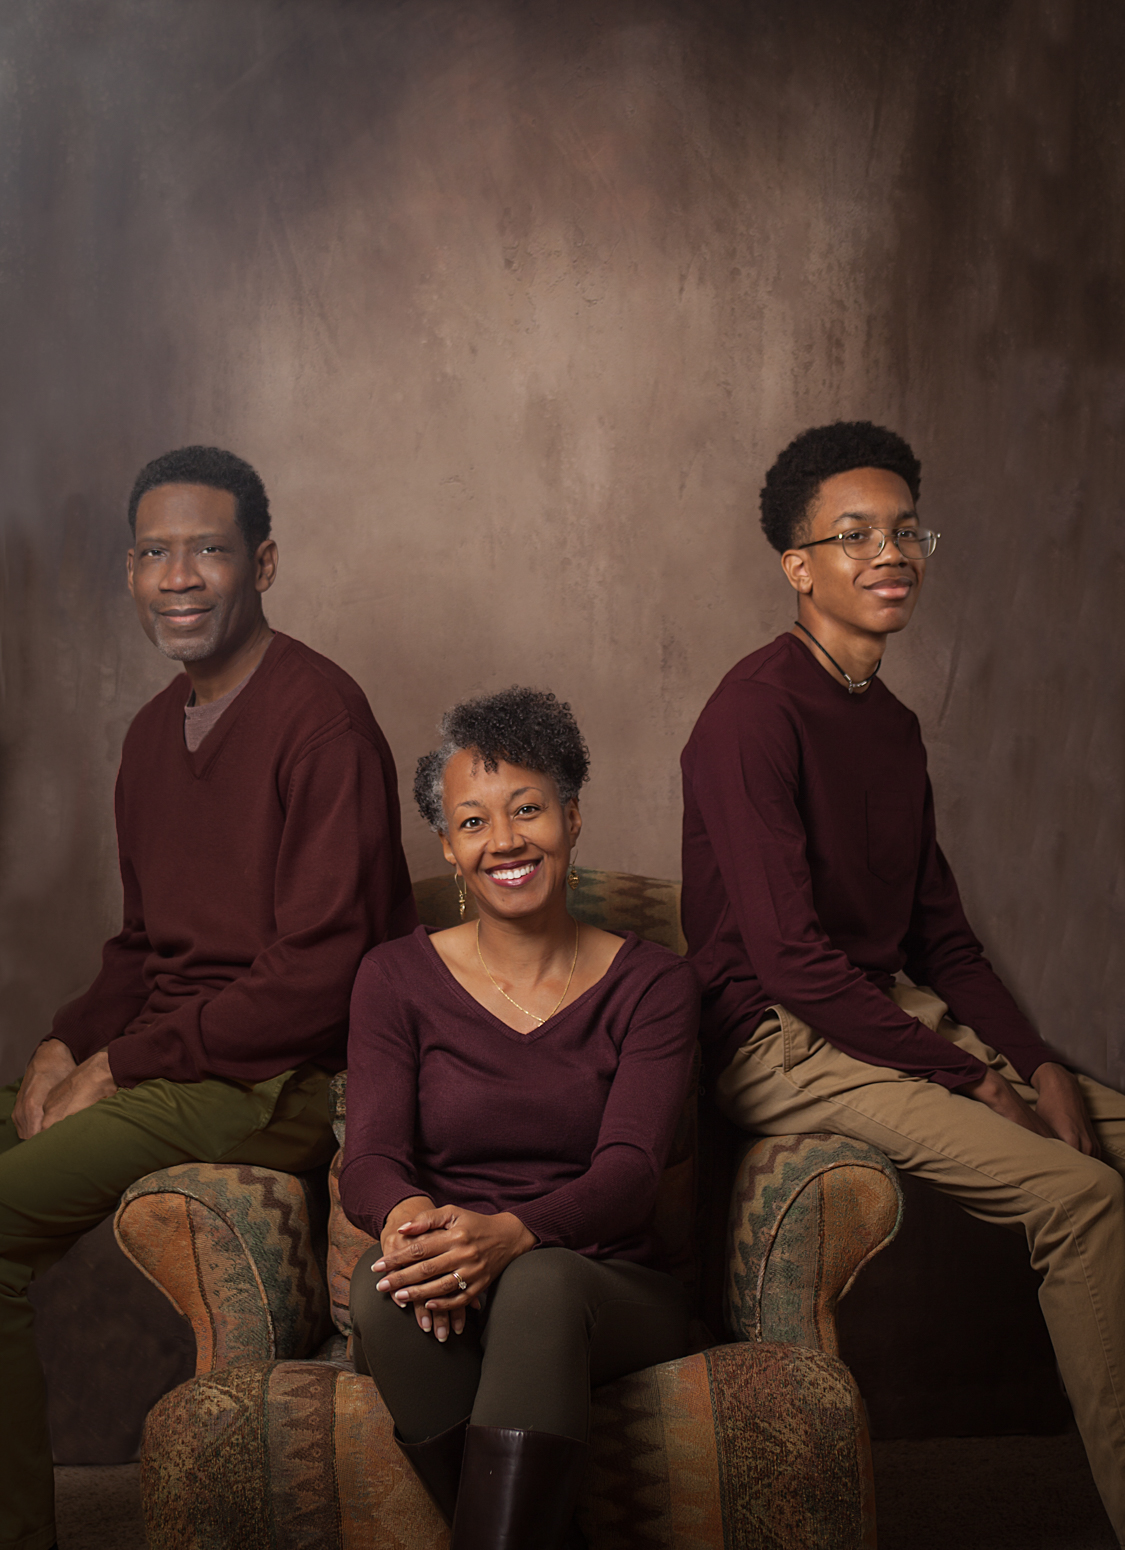 Portrait of a black family